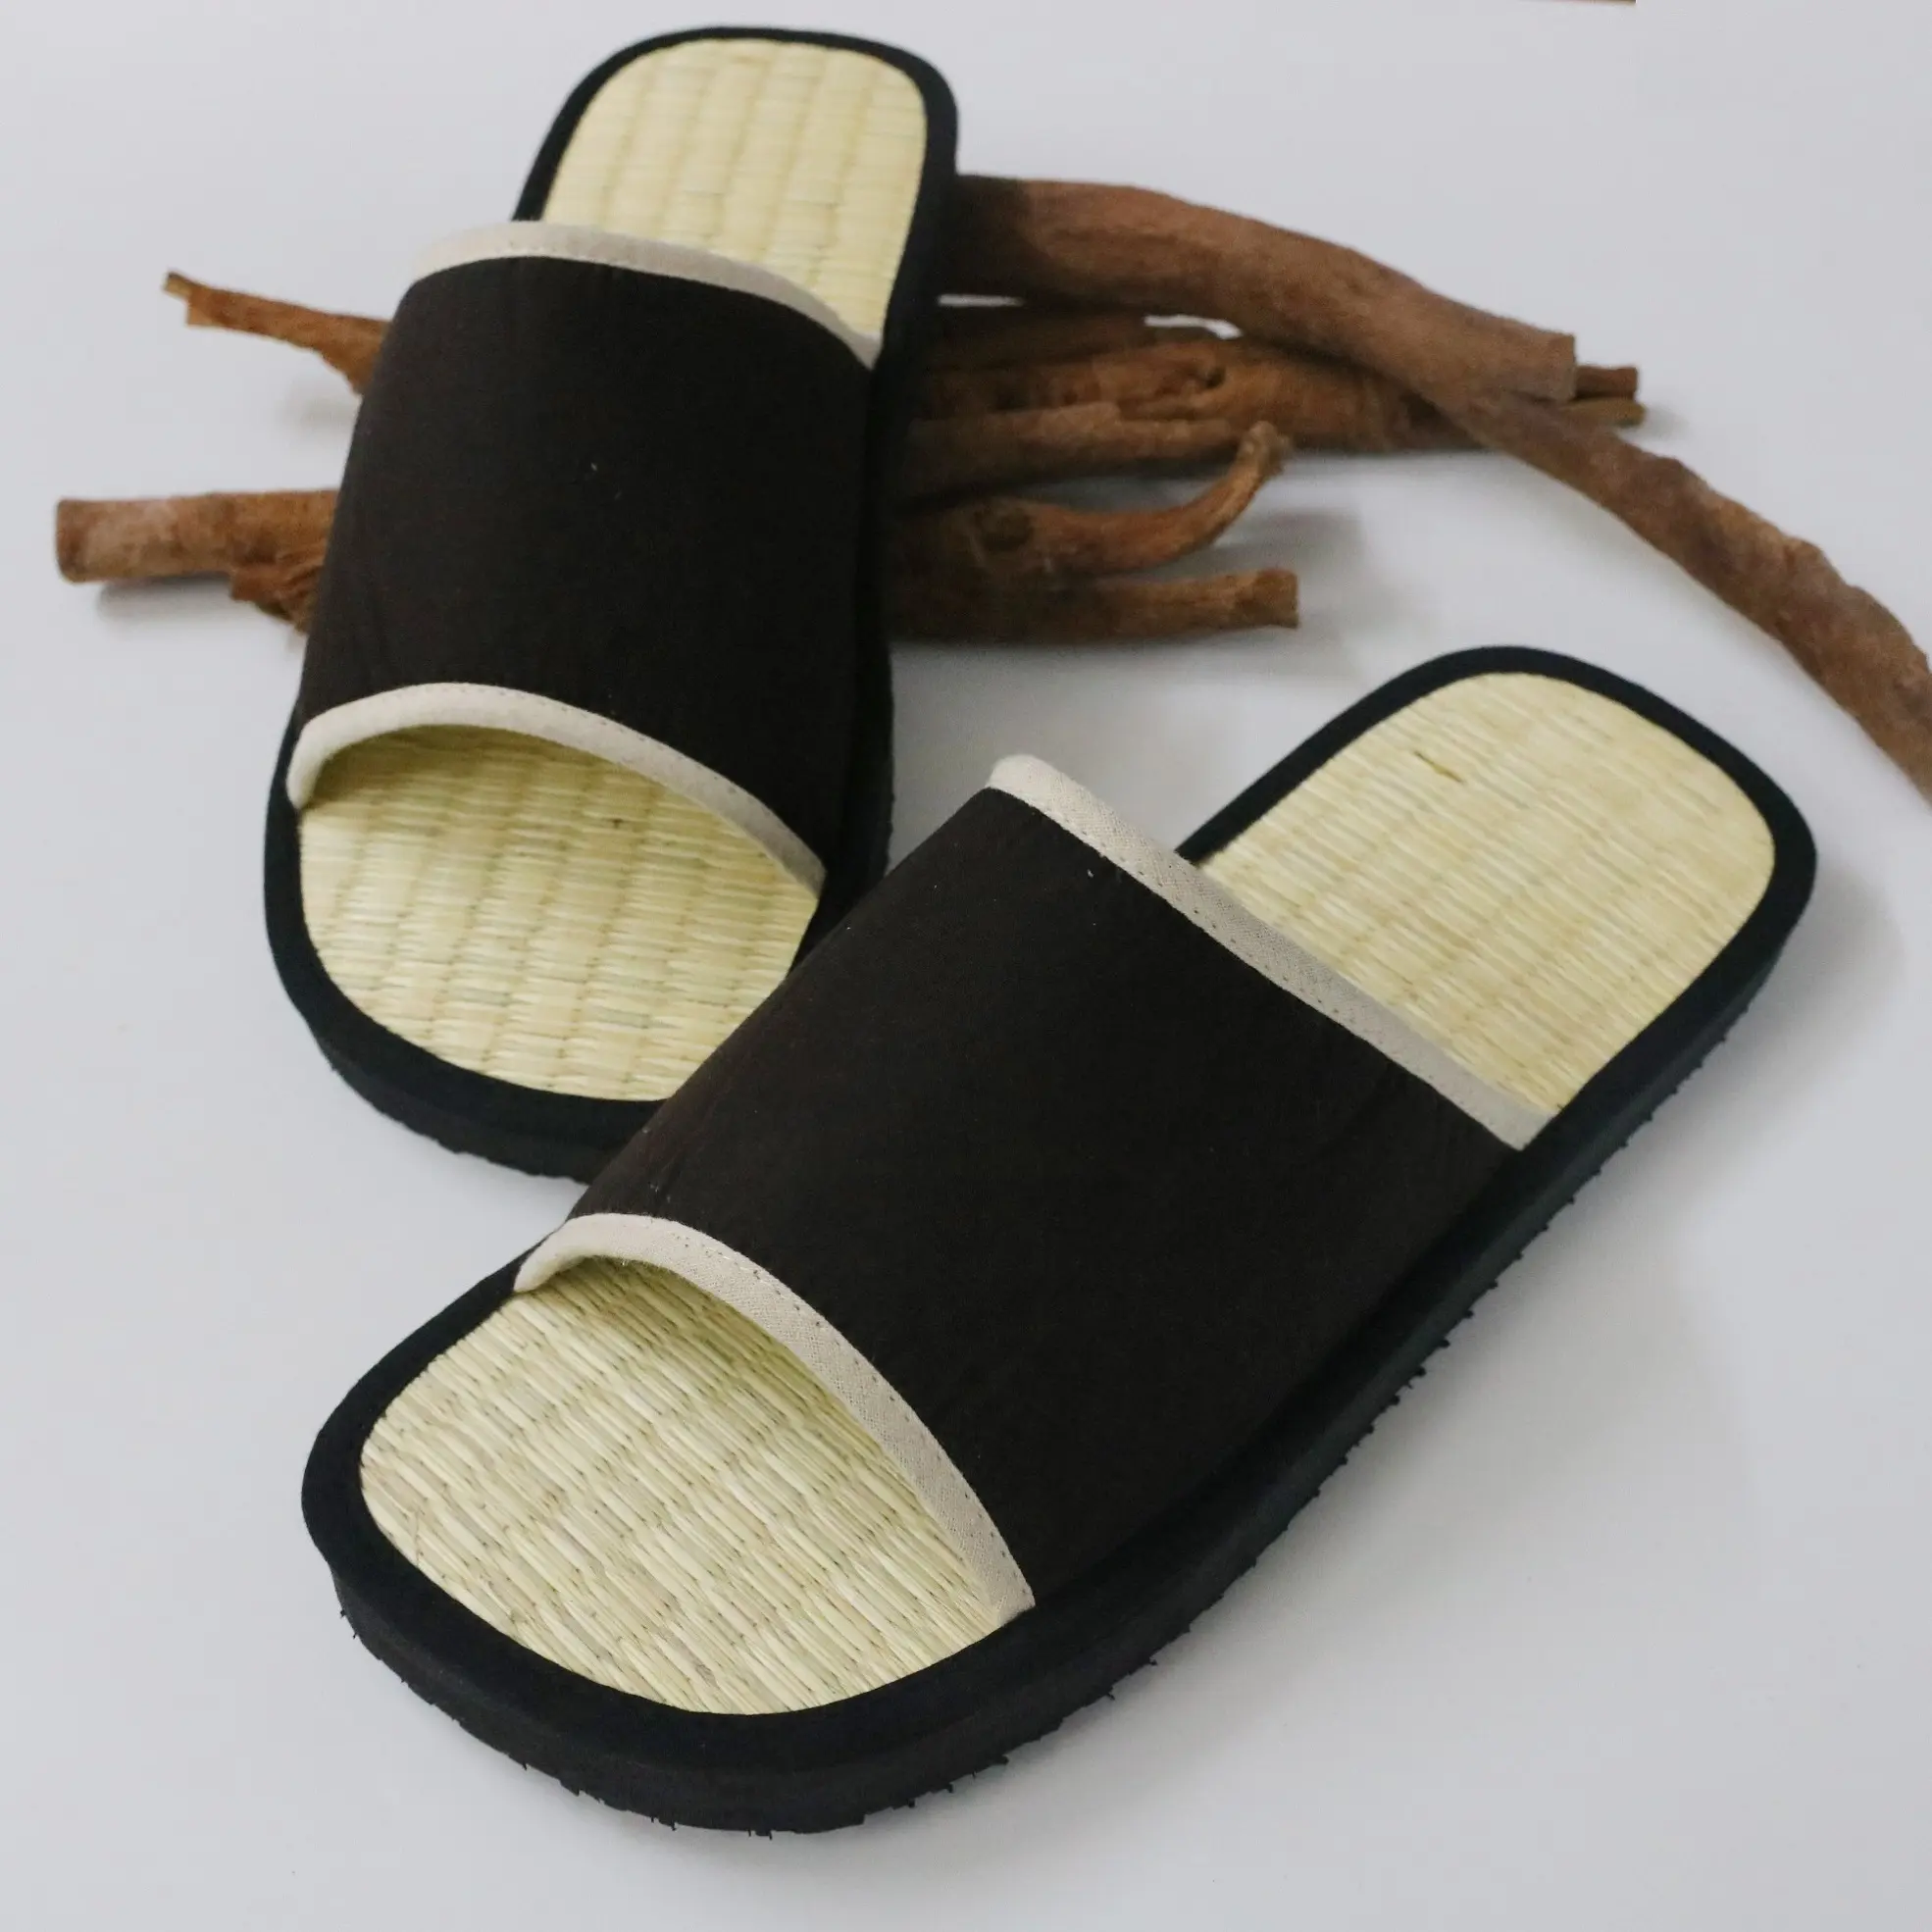 Vietnam Best Supplier Slippers - Super Slight Breathable Seagrass Cinnamon Sandals Slippers for Men and Women